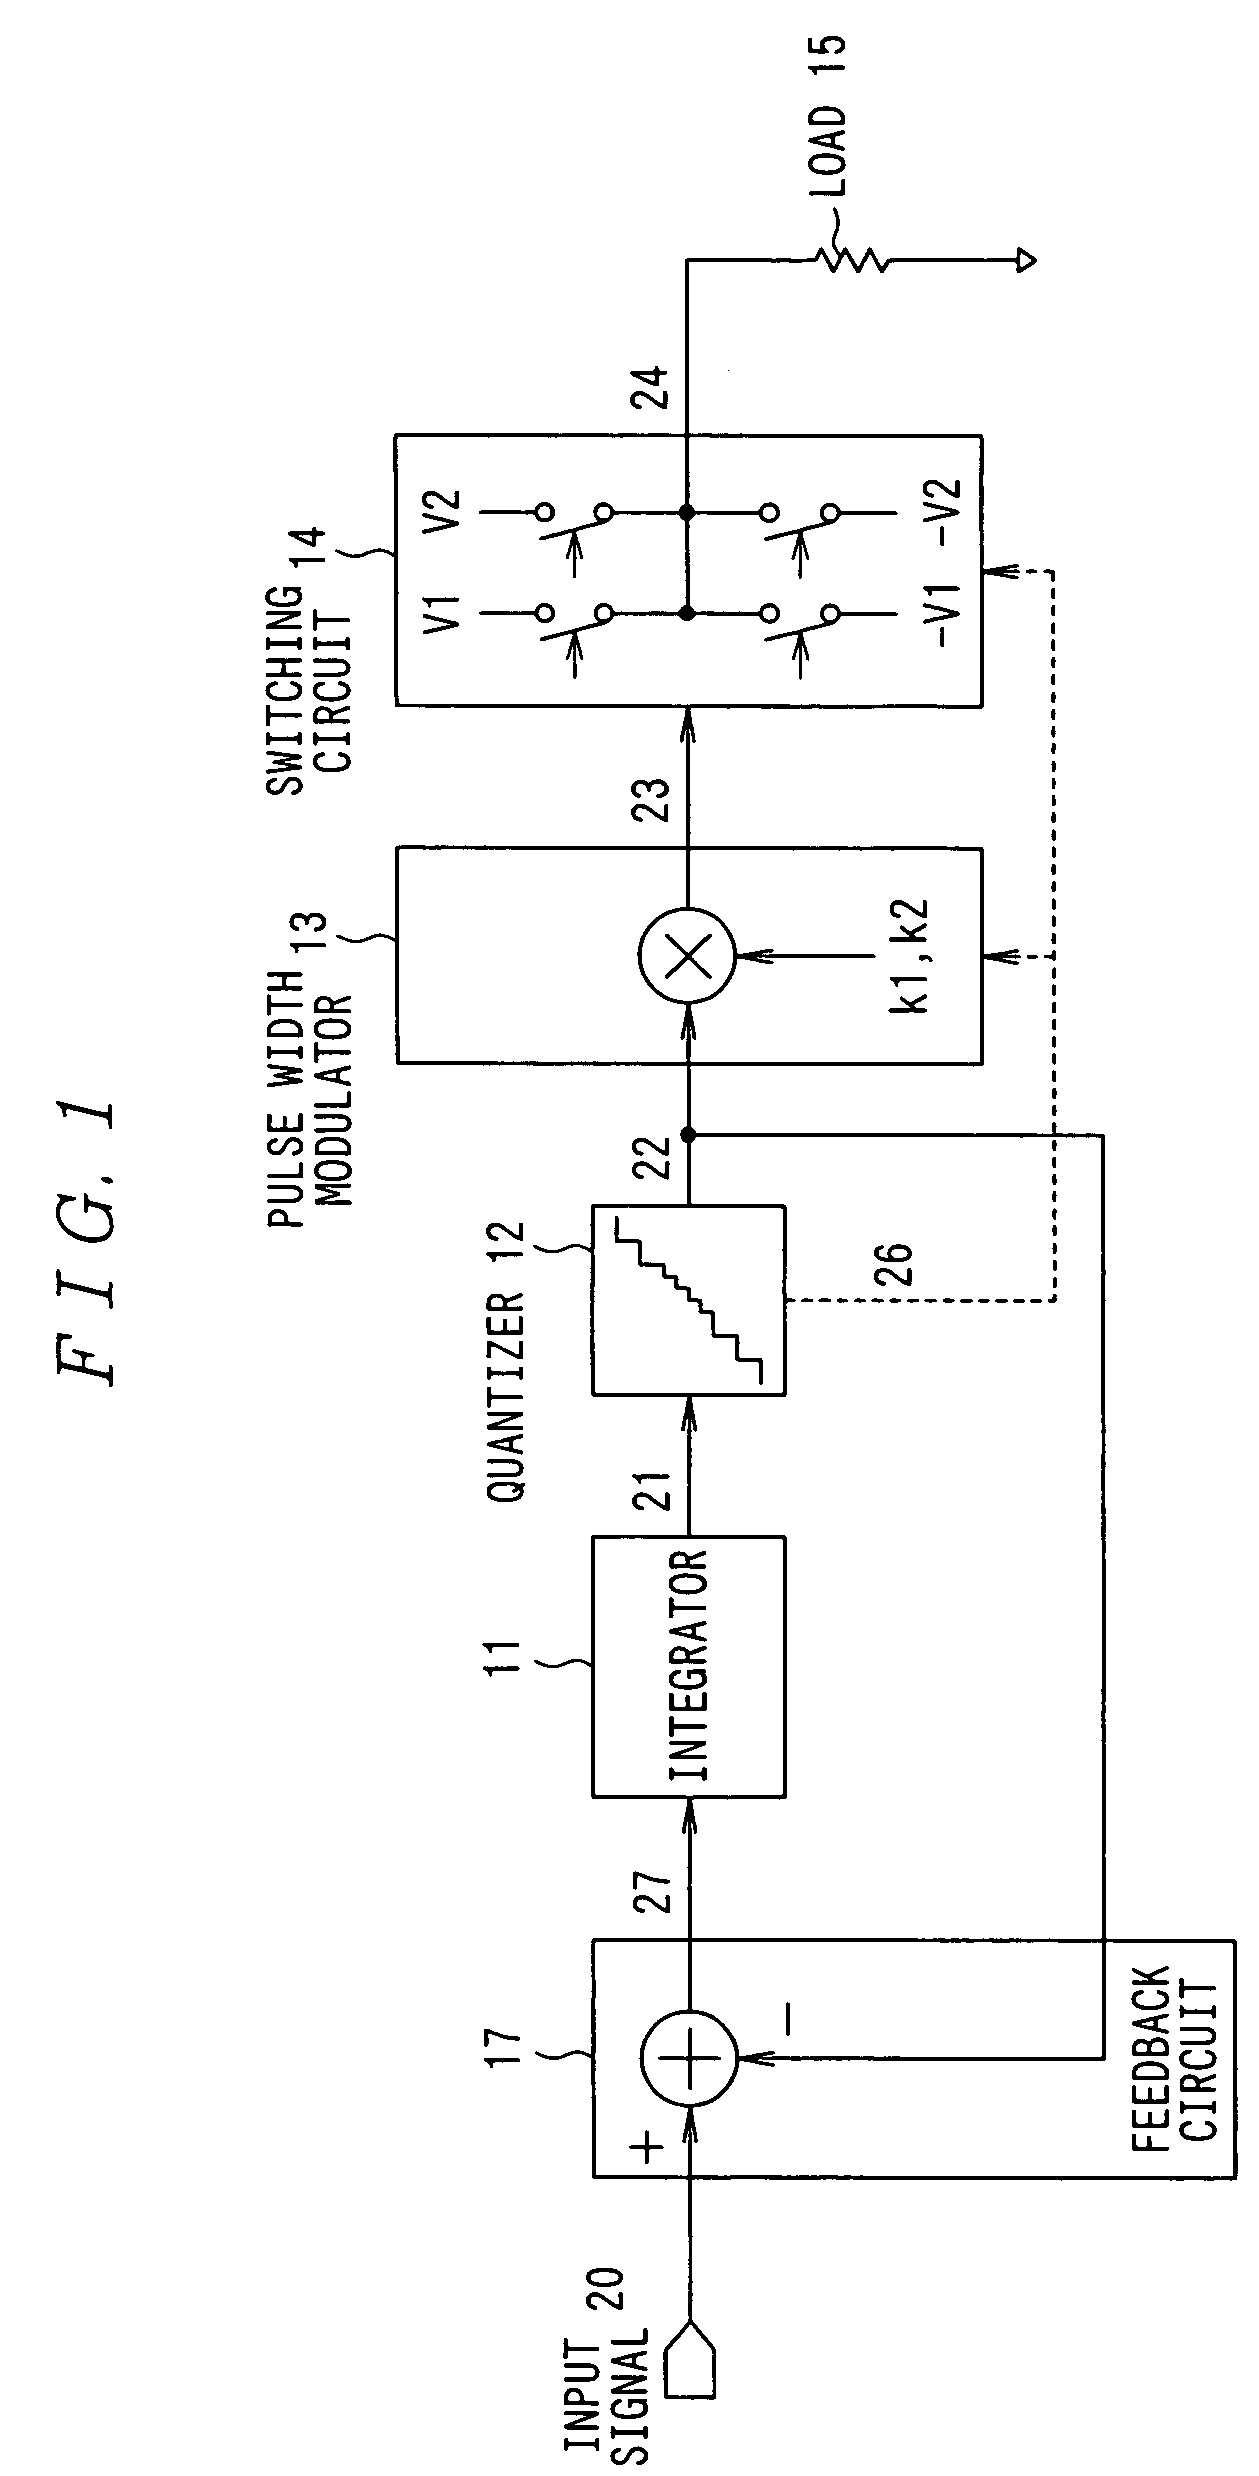 Digital switching amplifier